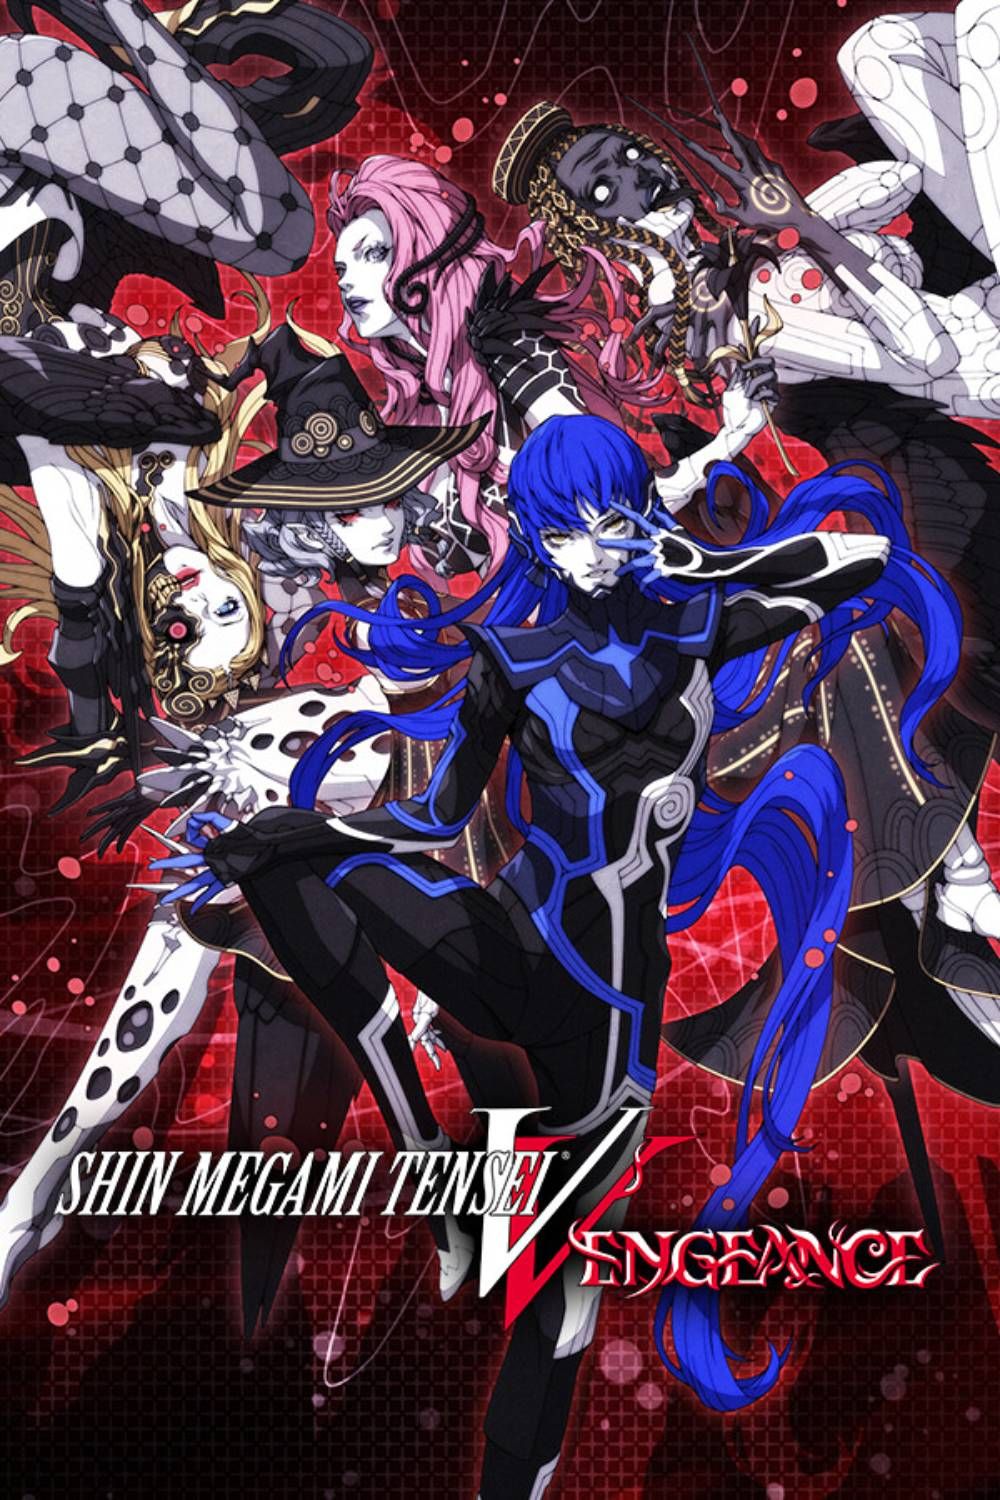 Shin Megami Tensei V: Vengeance Tag Page Cover Art